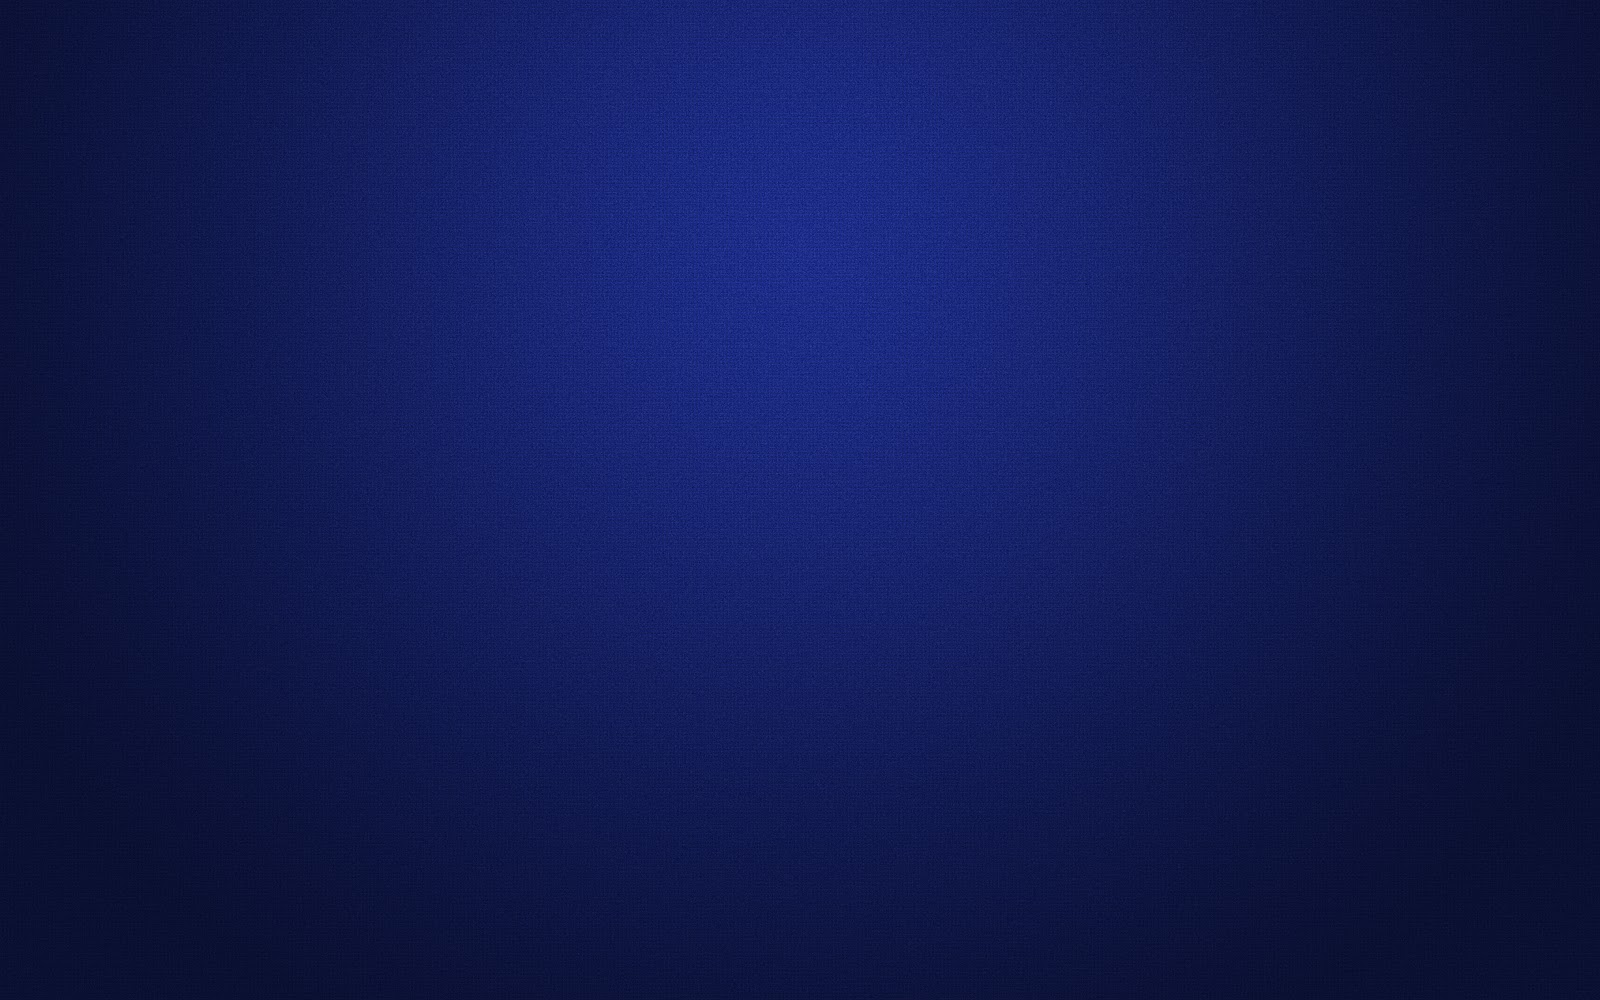   top desktop blue wallpapers blue wallpaper blue background hd 27jpg